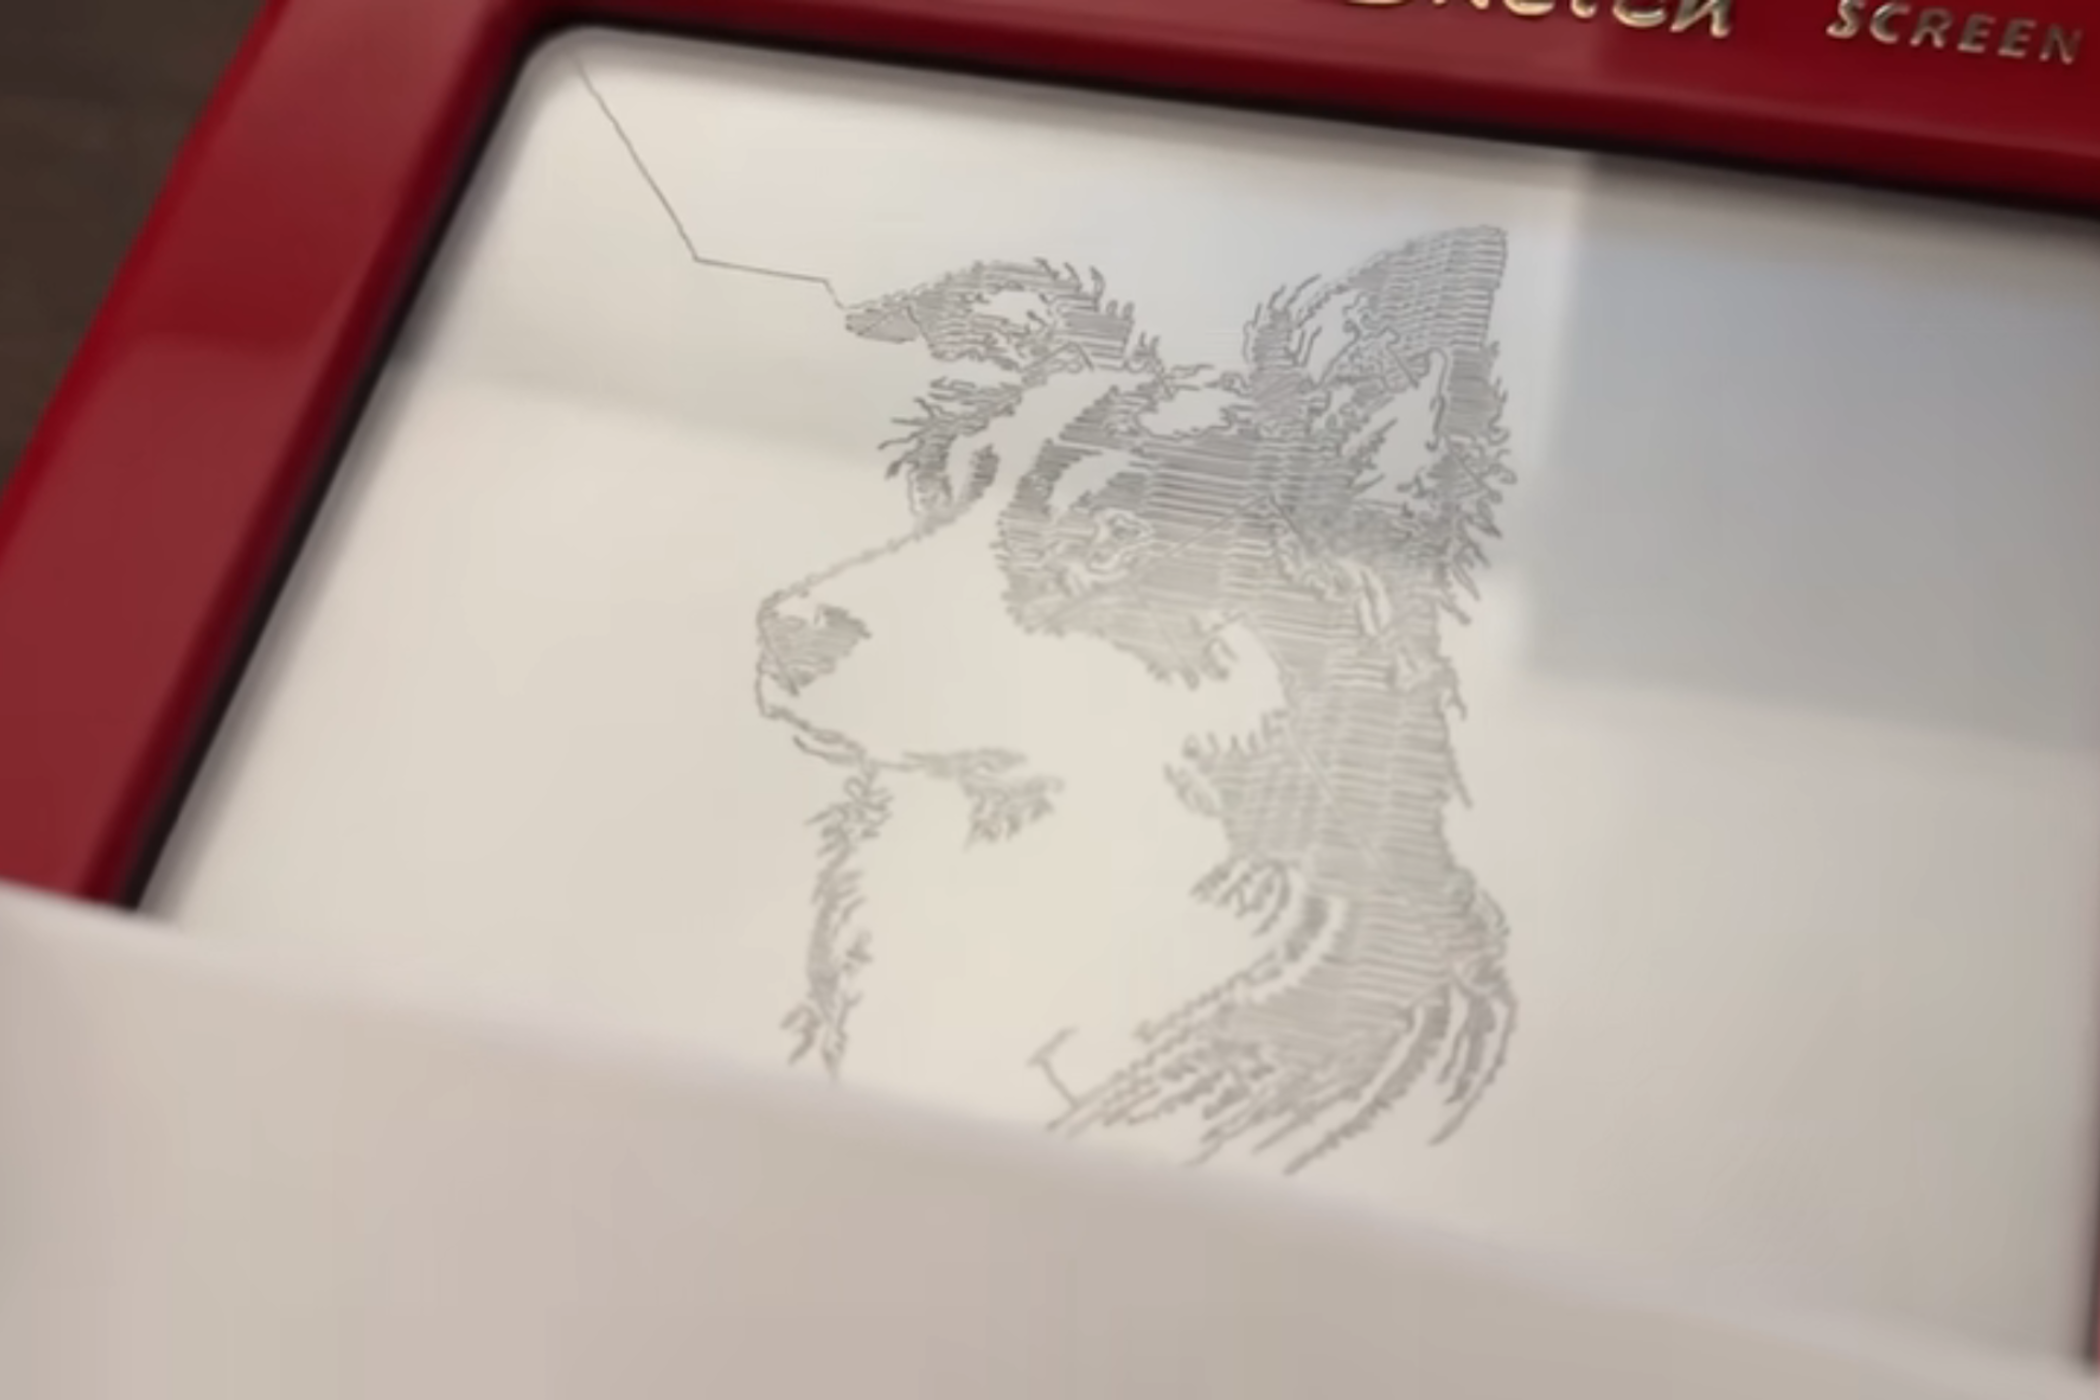 The Raspberry Pi Etch-a-Sketch drawing a dog